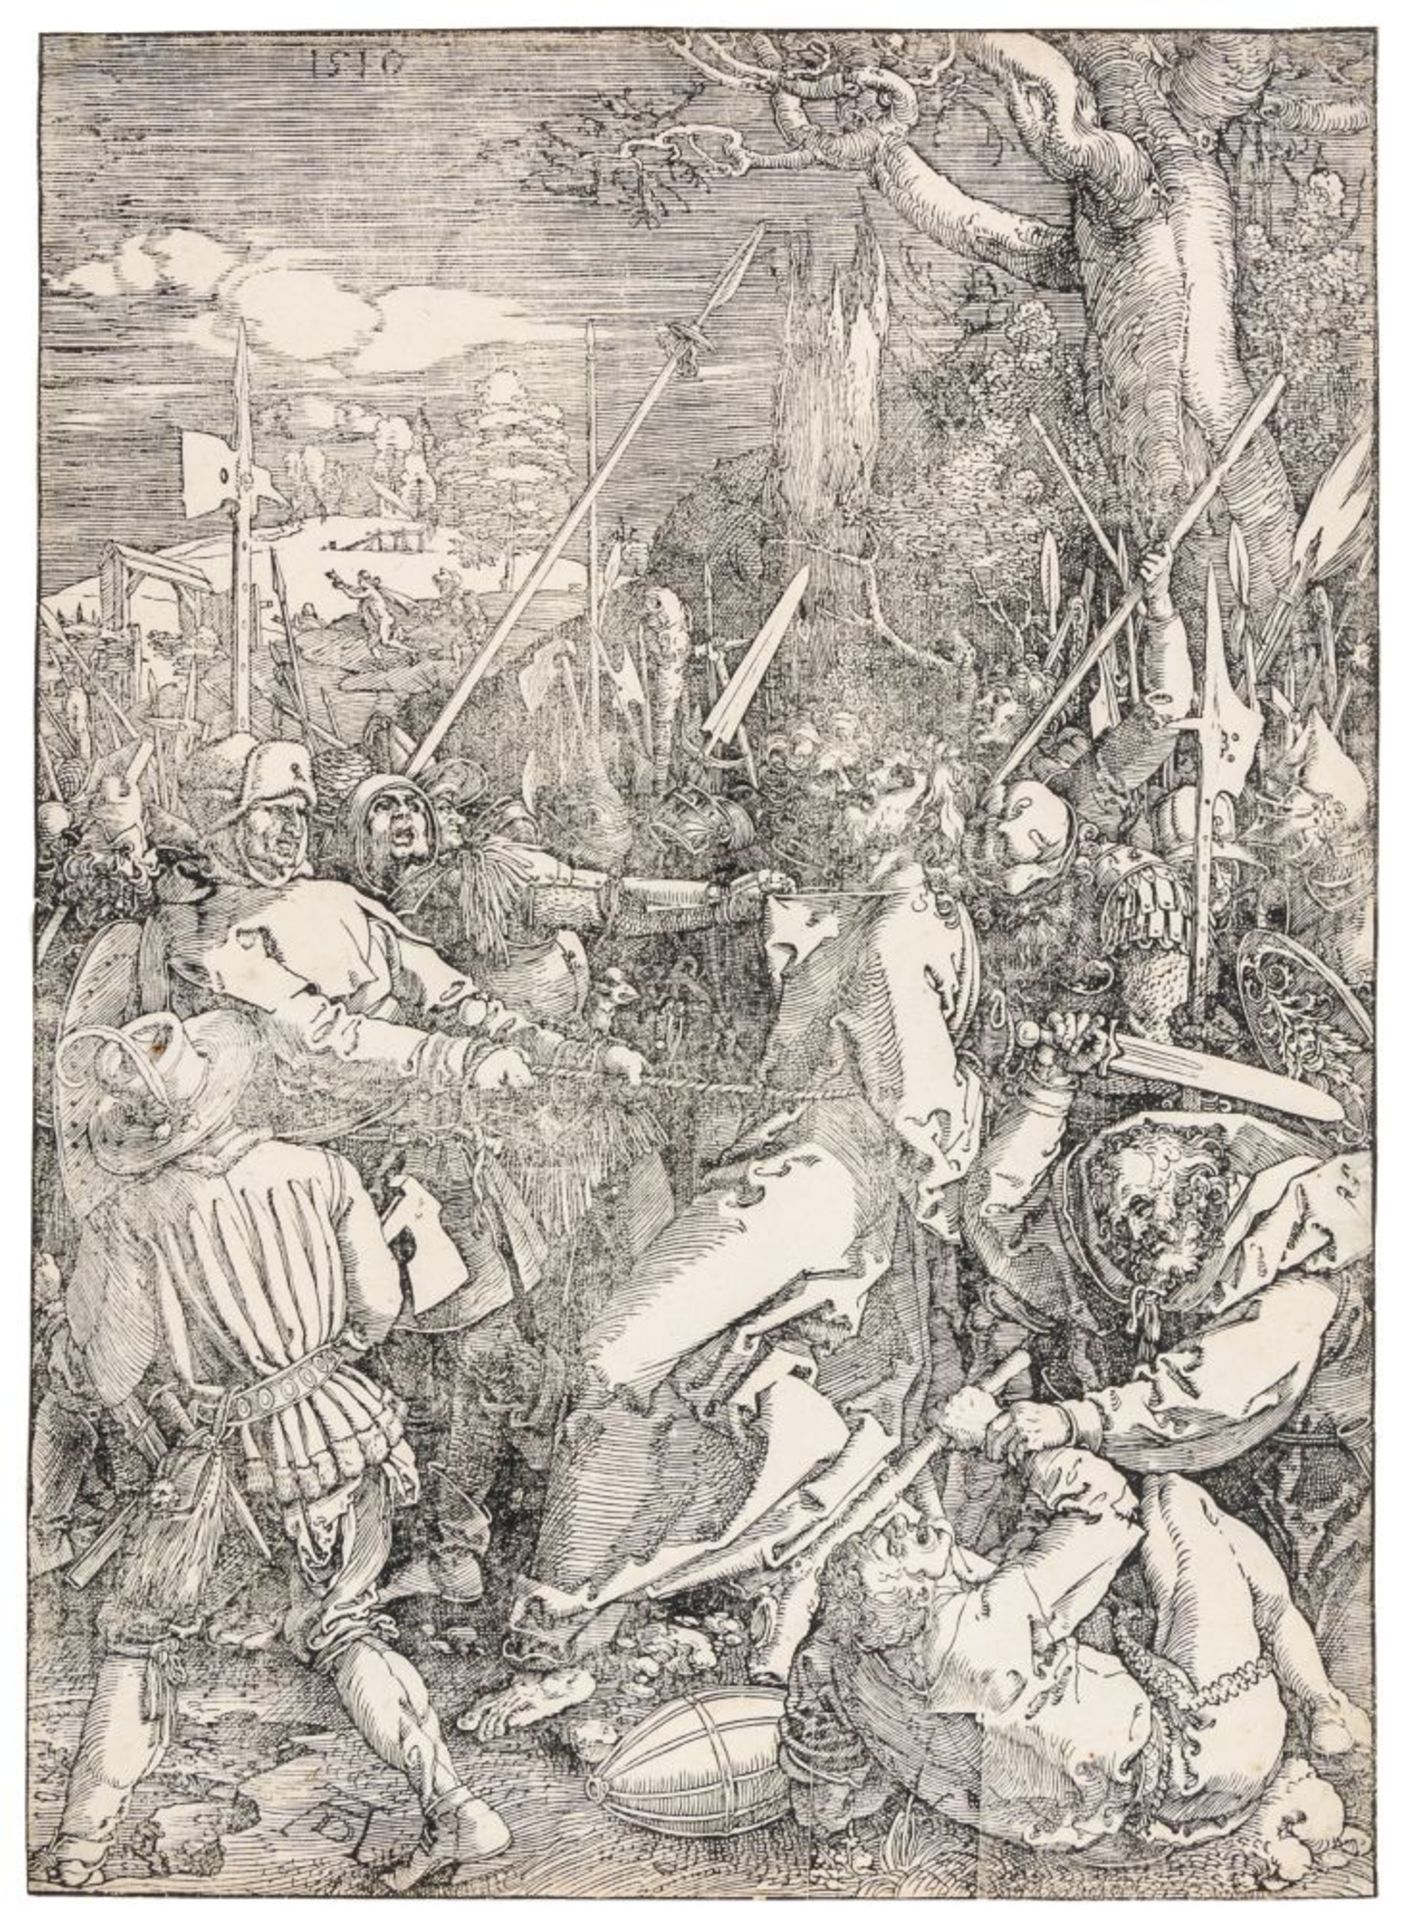 Dürer, Albrecht. Gefangennahme Christi. Blatt 4 der Großen Passion. Holzschnitt auf Bütten. 1510.